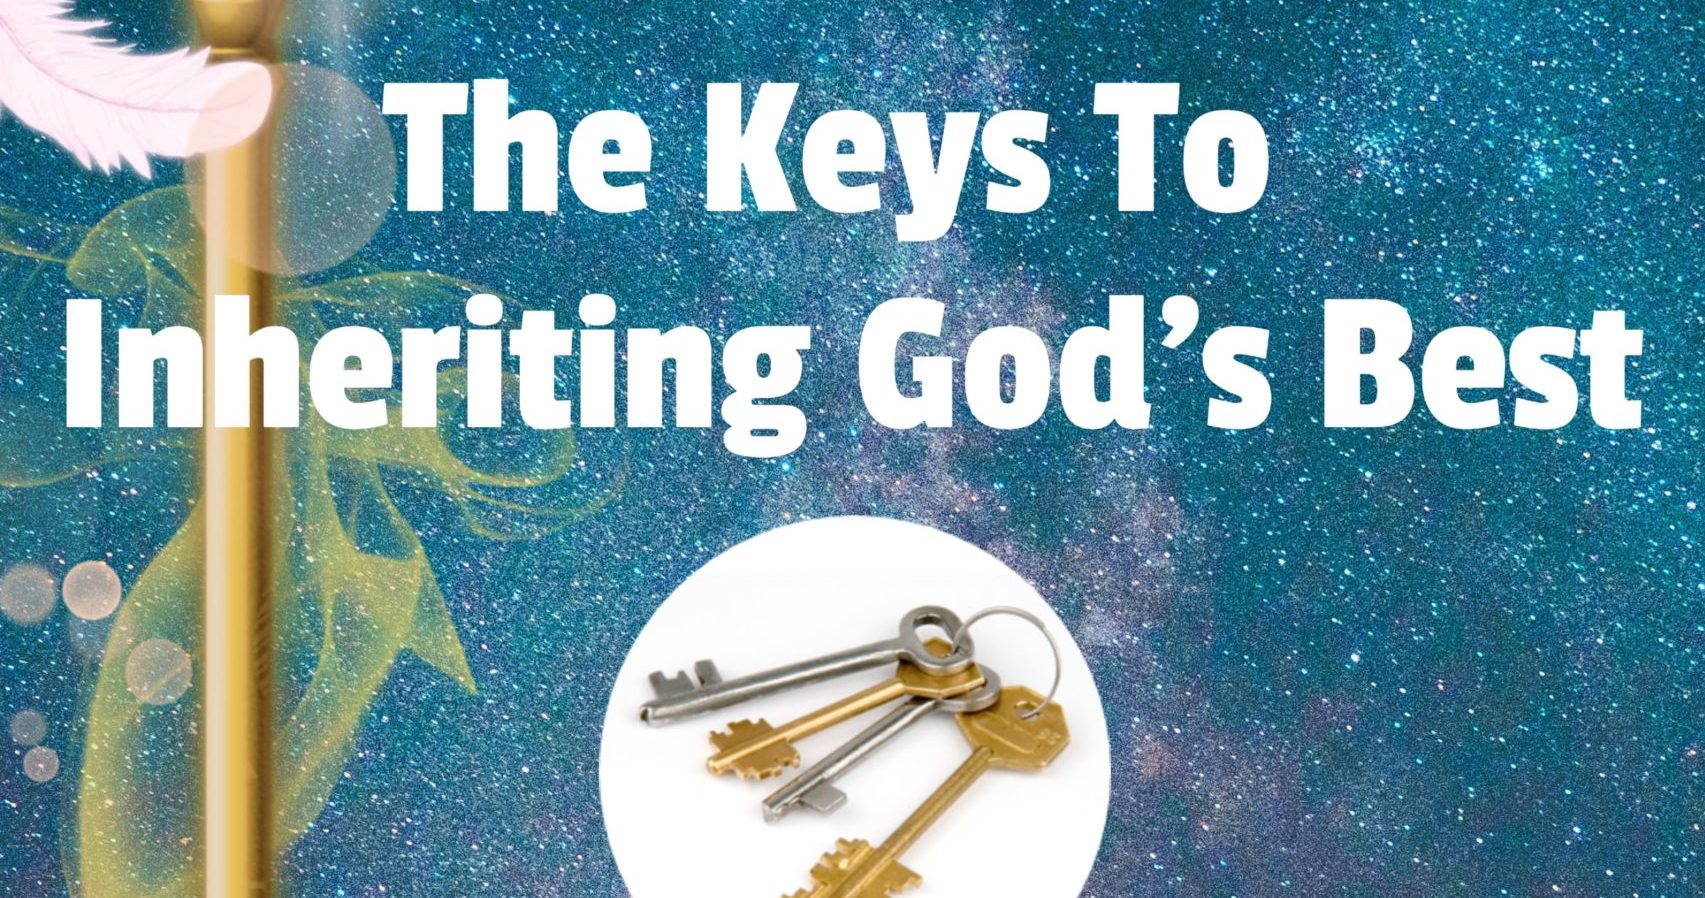 "The Keys To Inheriting God's Best"